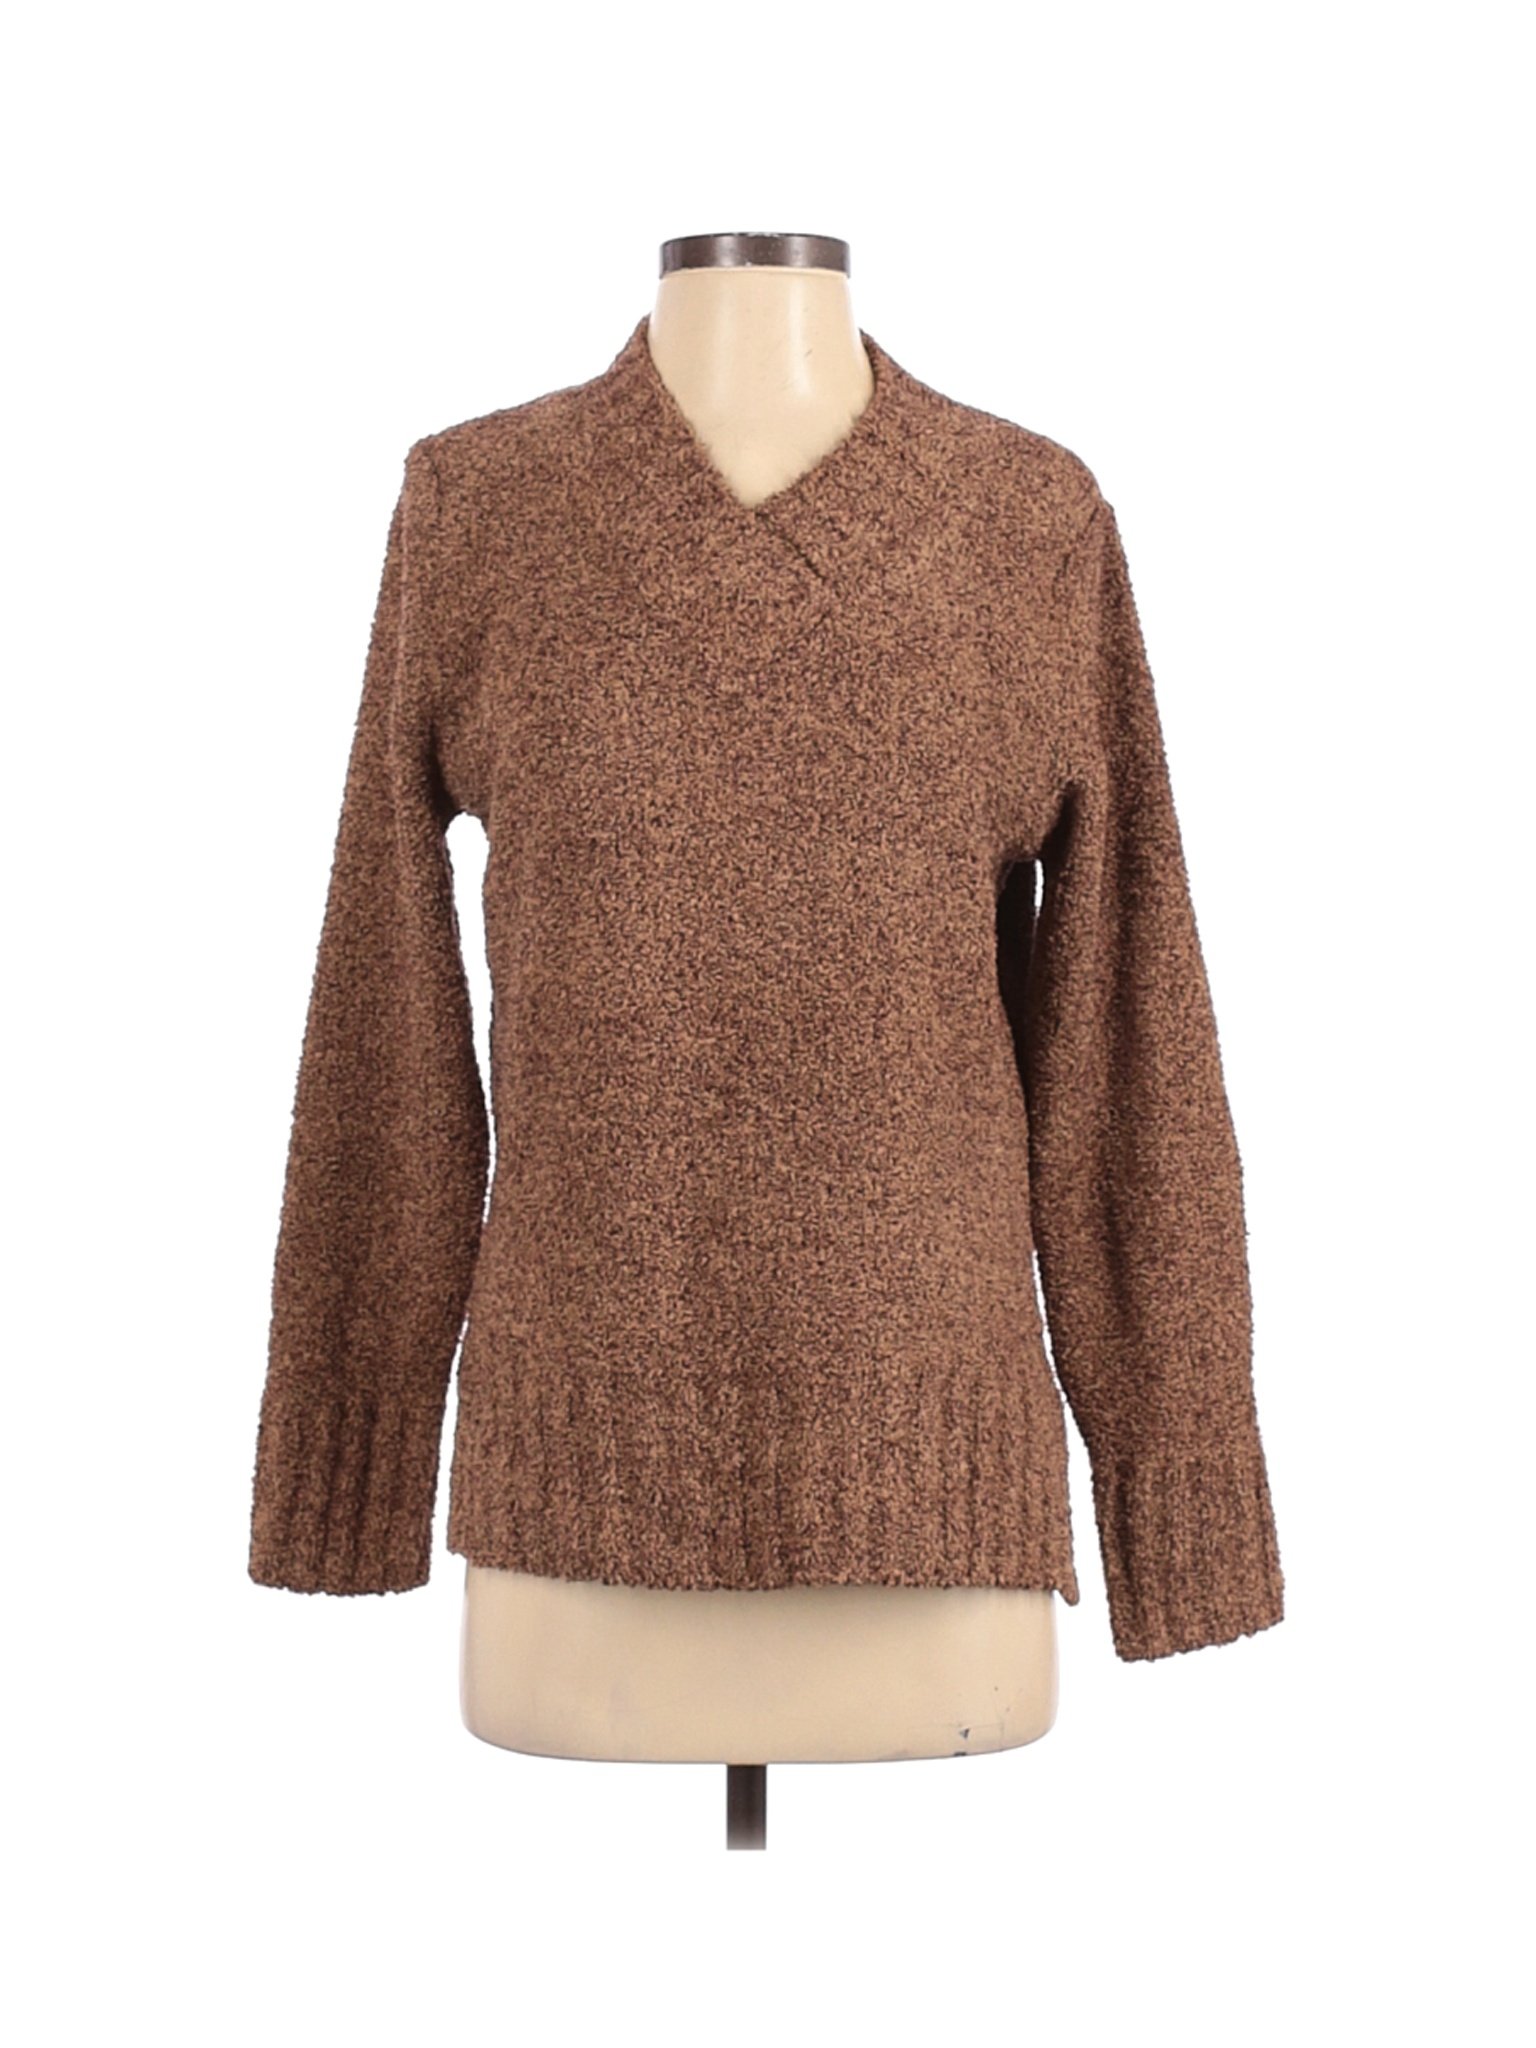 Cabin Creek Women Brown Pullover Sweater S | eBay